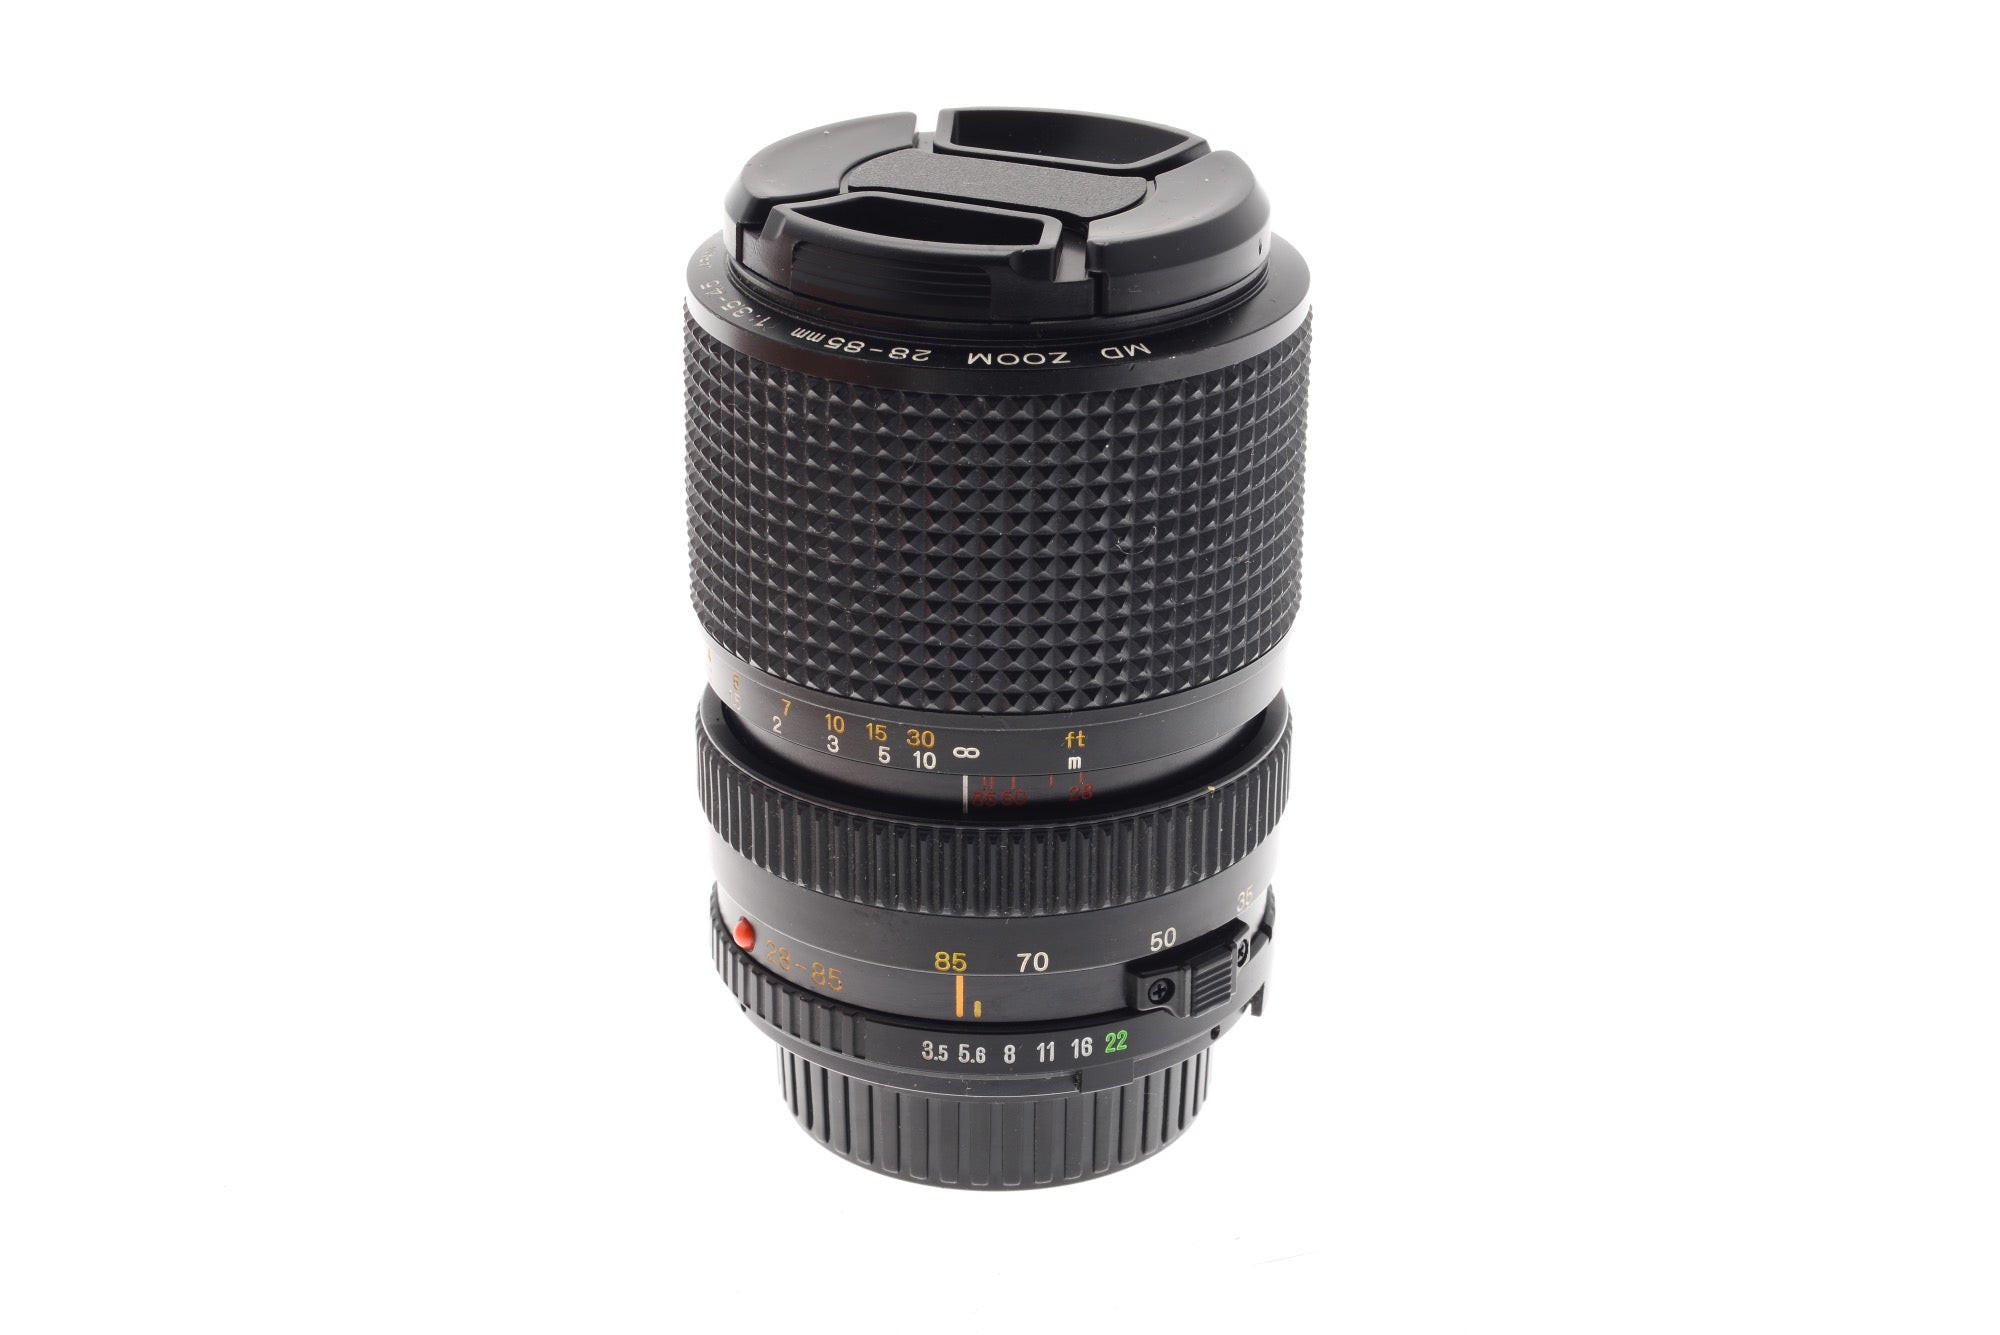 Minolta 28-85mm f3.5-4.5 MD Zoom - Lens